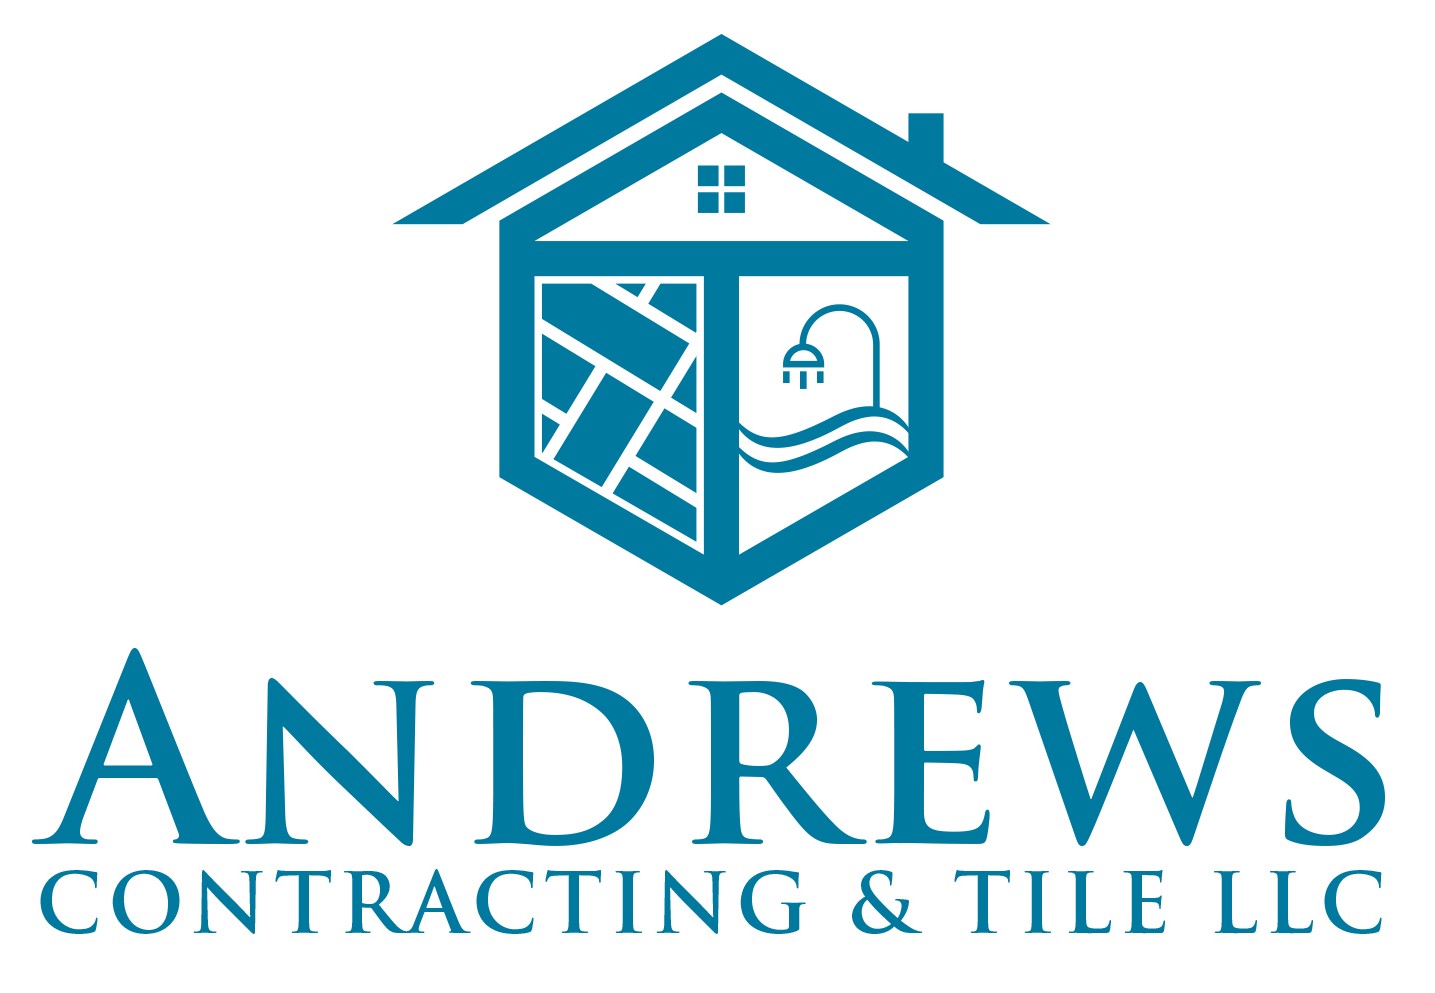 ANDREWS CONTRACTING & TILE LLC Logo